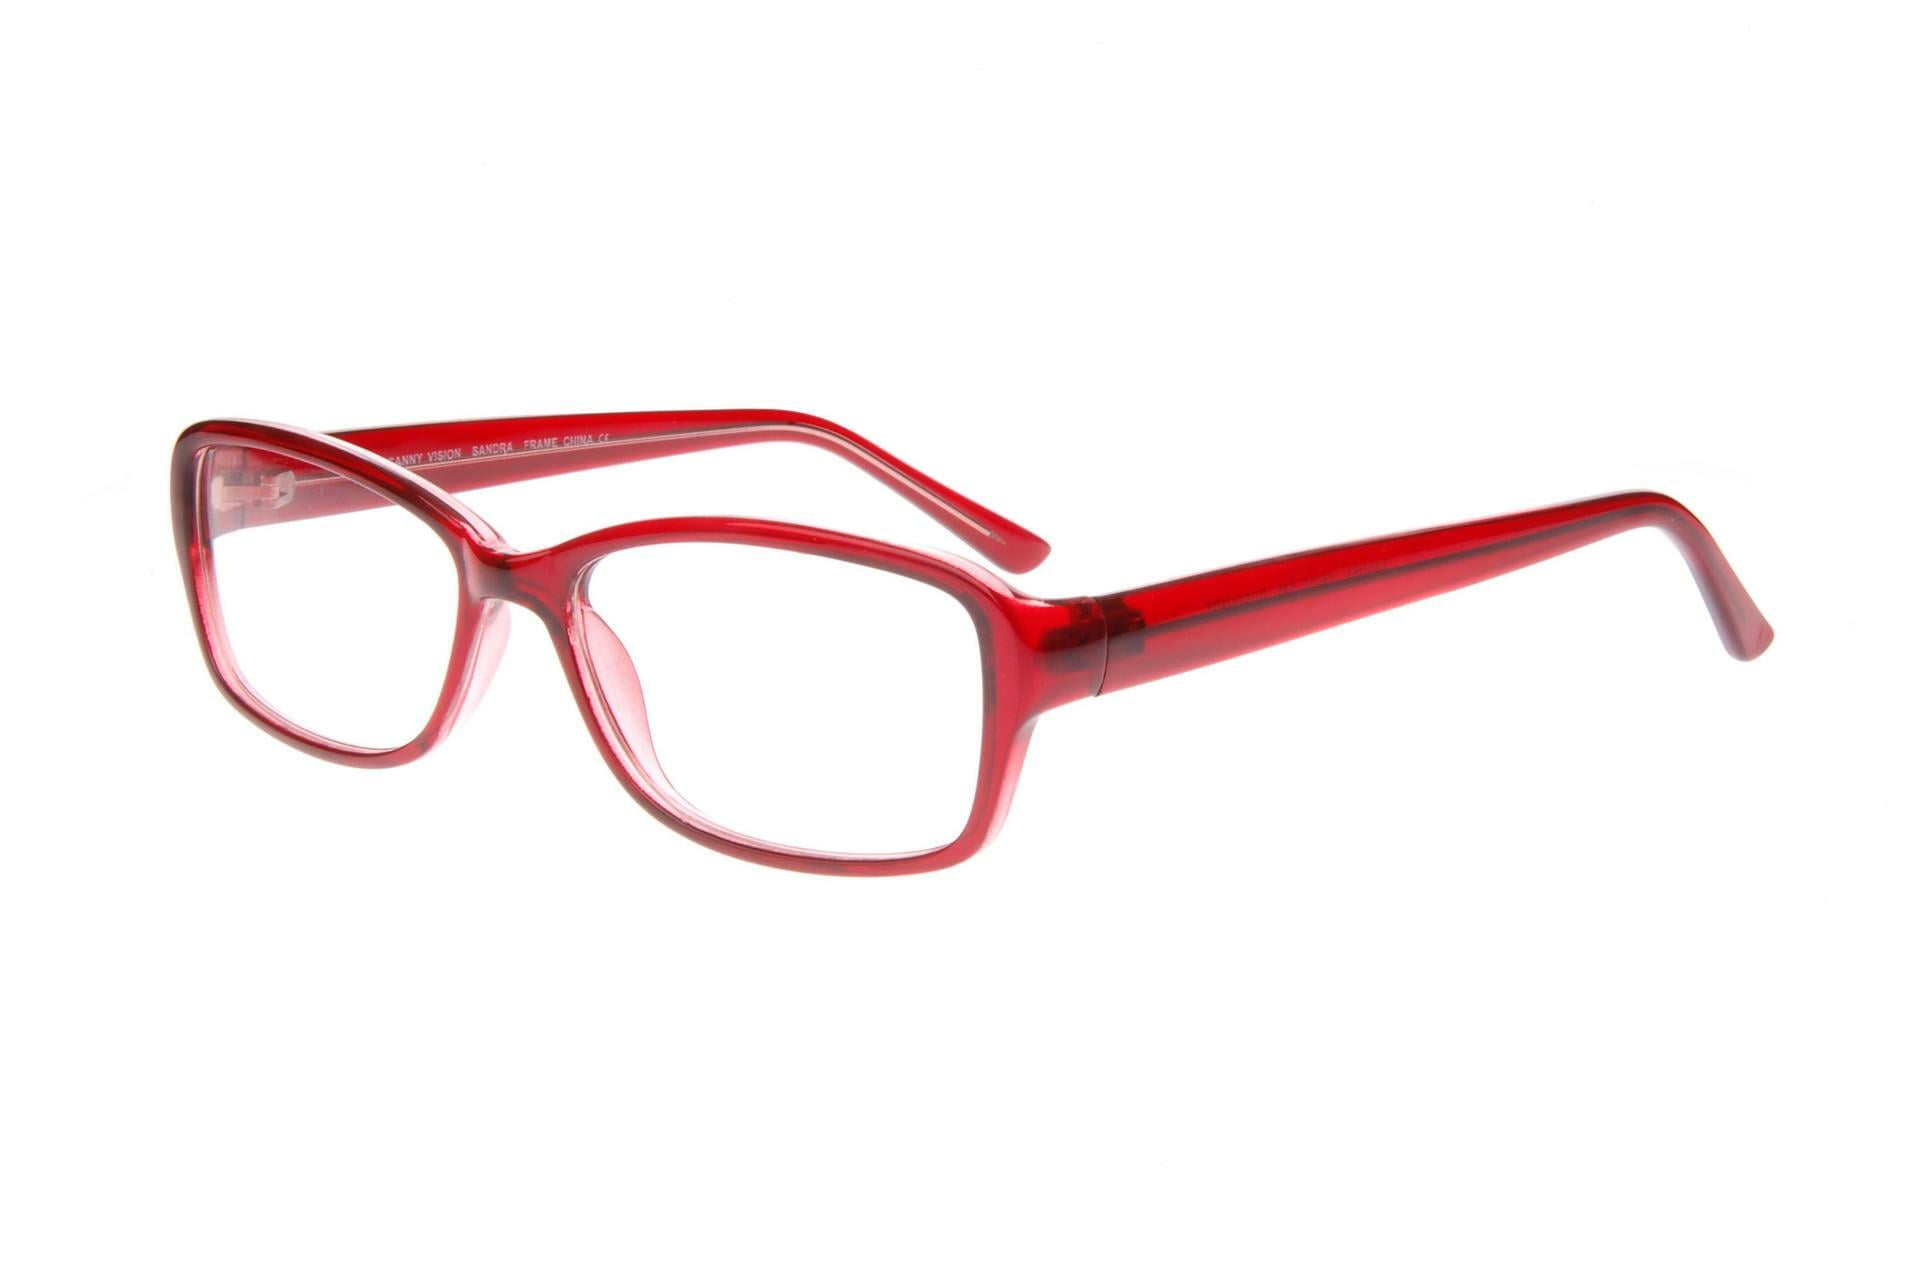 NEW CANNY VISION Burgundy SANDRA Eyeglasses 54mm with Case - Walmart.com